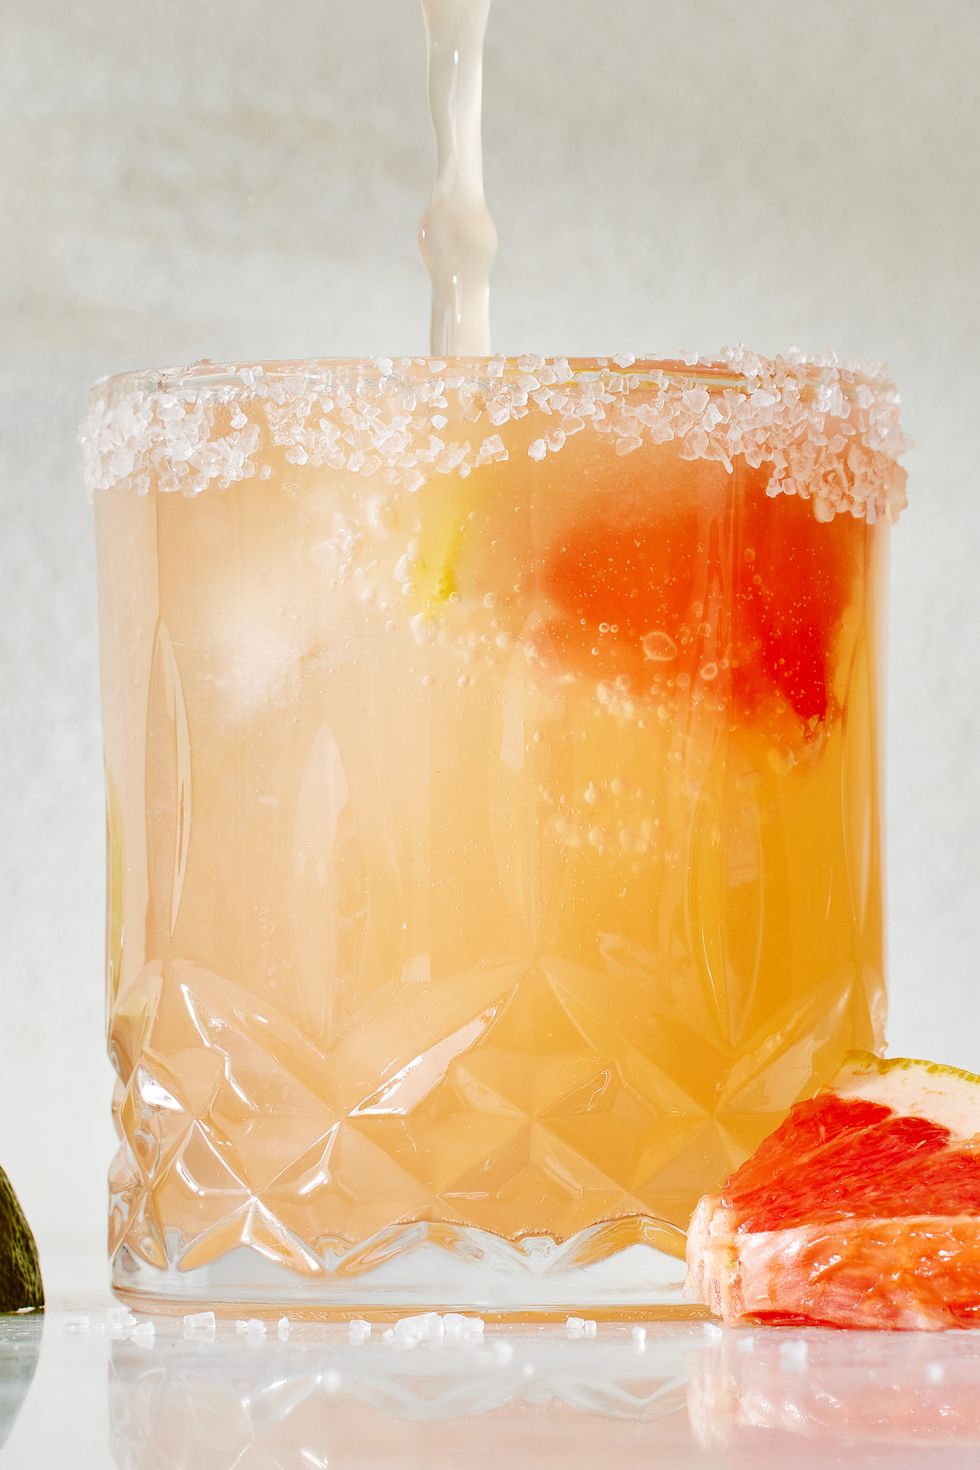 paloma cocktail with a salt rim and grapefruit garnish